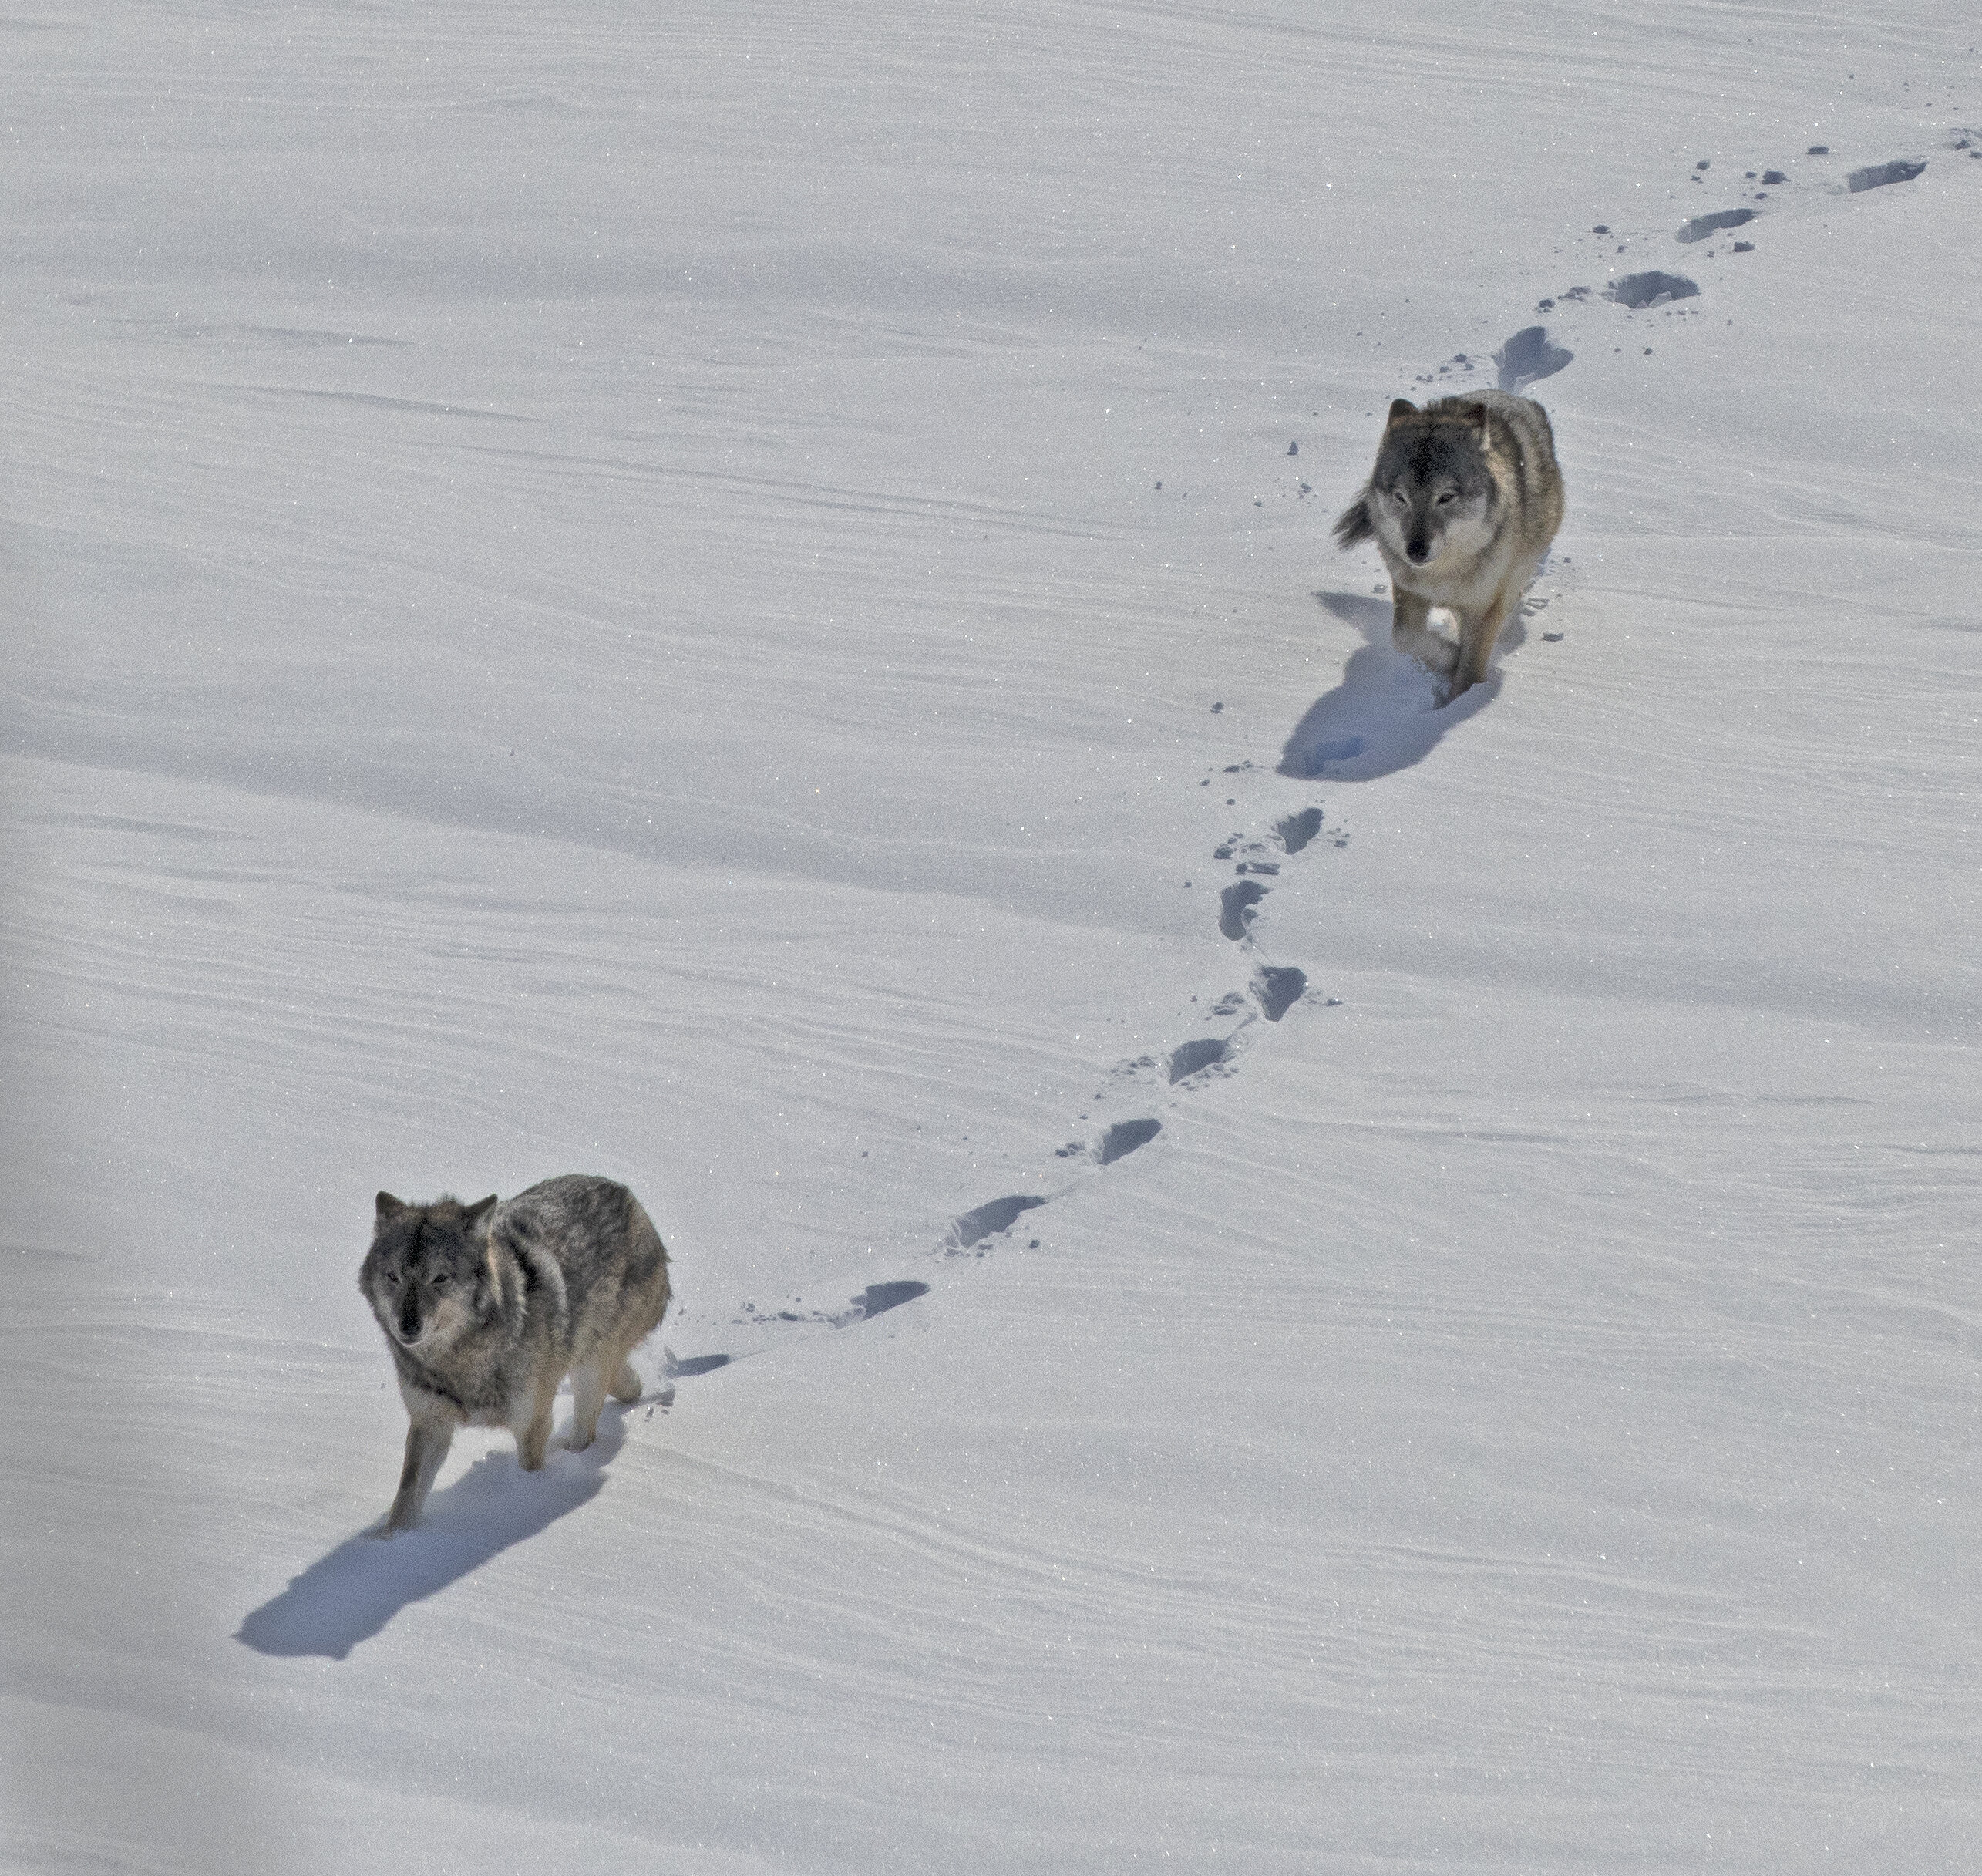 isle-royale-winter-study-13-new-wolves-20-radio-collared-moose